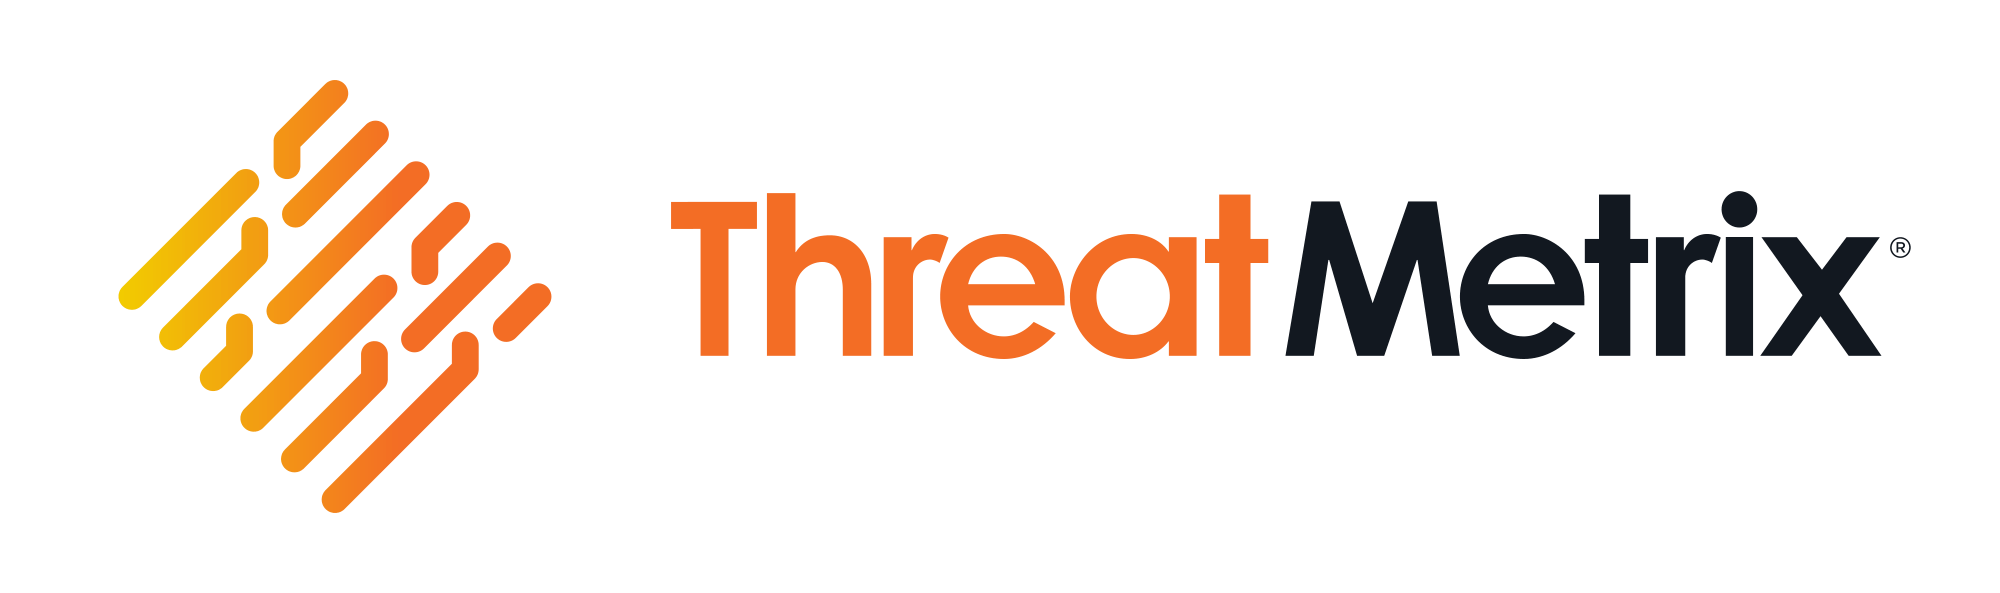 ThreatMetrix Logo - 108 Companies that are using ThreatMetrix Fraud Prevention Software